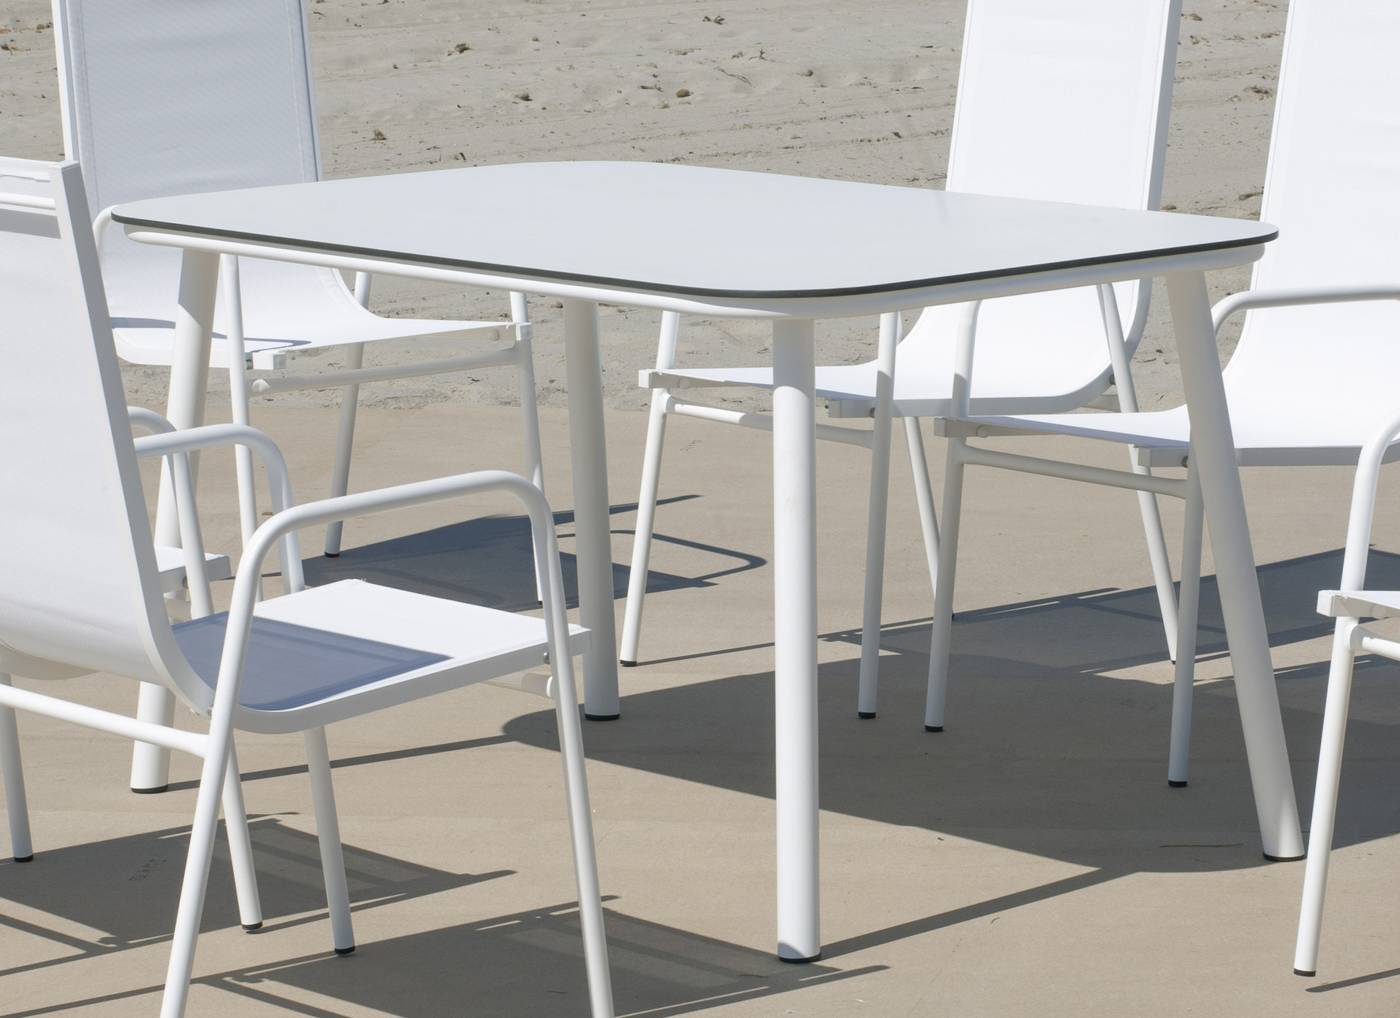 Set Mundra-150-4 Leiran - Conjunto aluminio para jardín: Mesa rectangular con tablero HPL de 150 cm + 4 sillones de textilen. Colores: blanco y antracita.